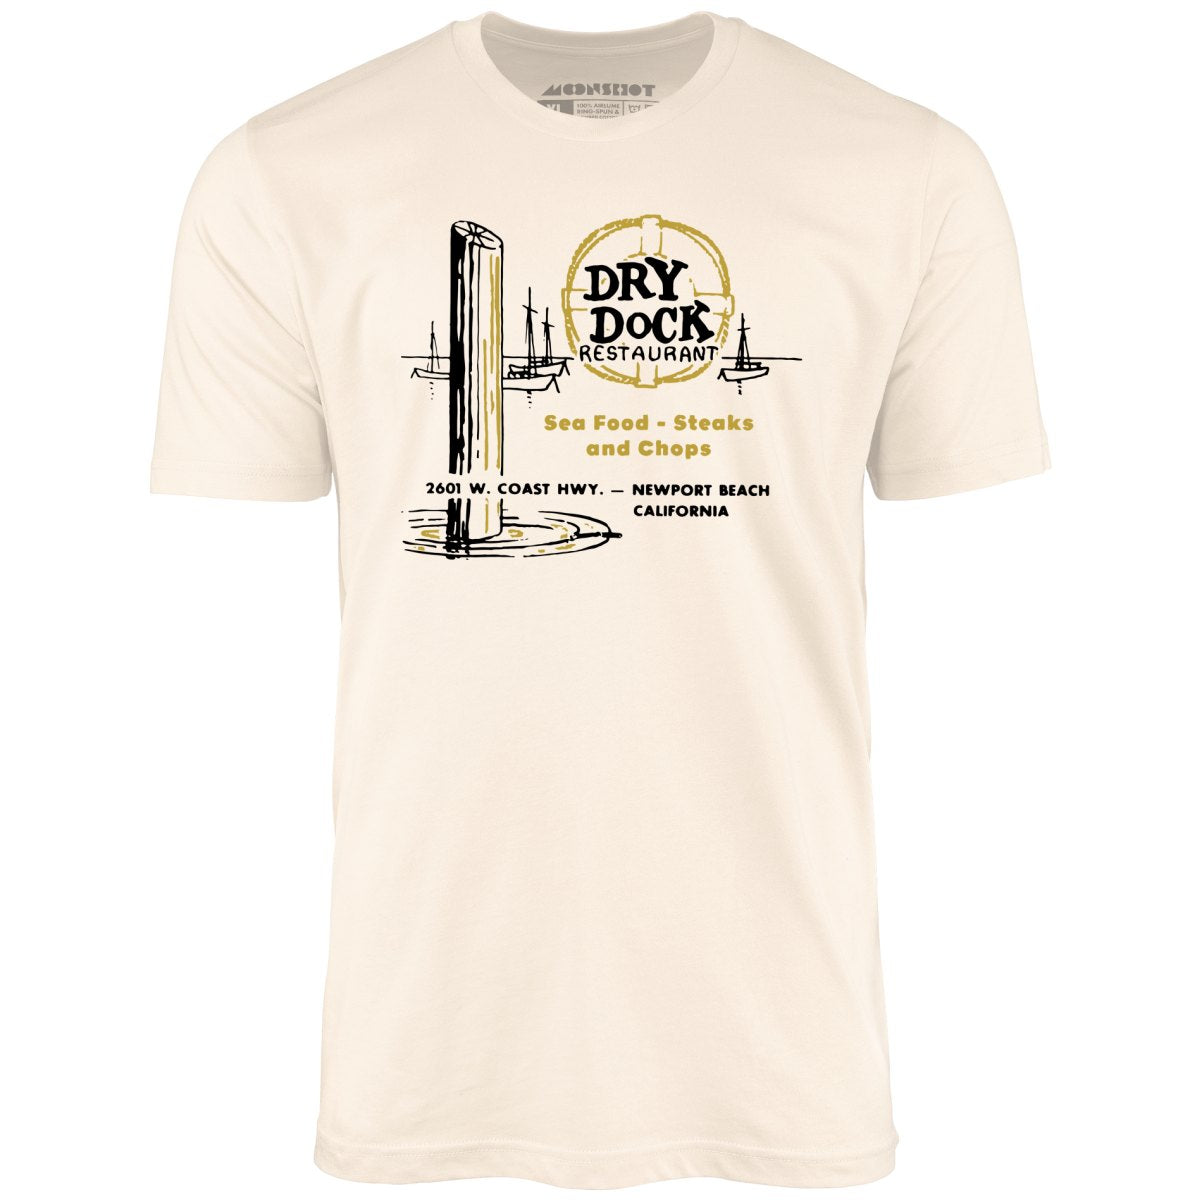 Dry Dock - Newport Beach, CA - Vintage Restaurant - Unisex T-Shirt